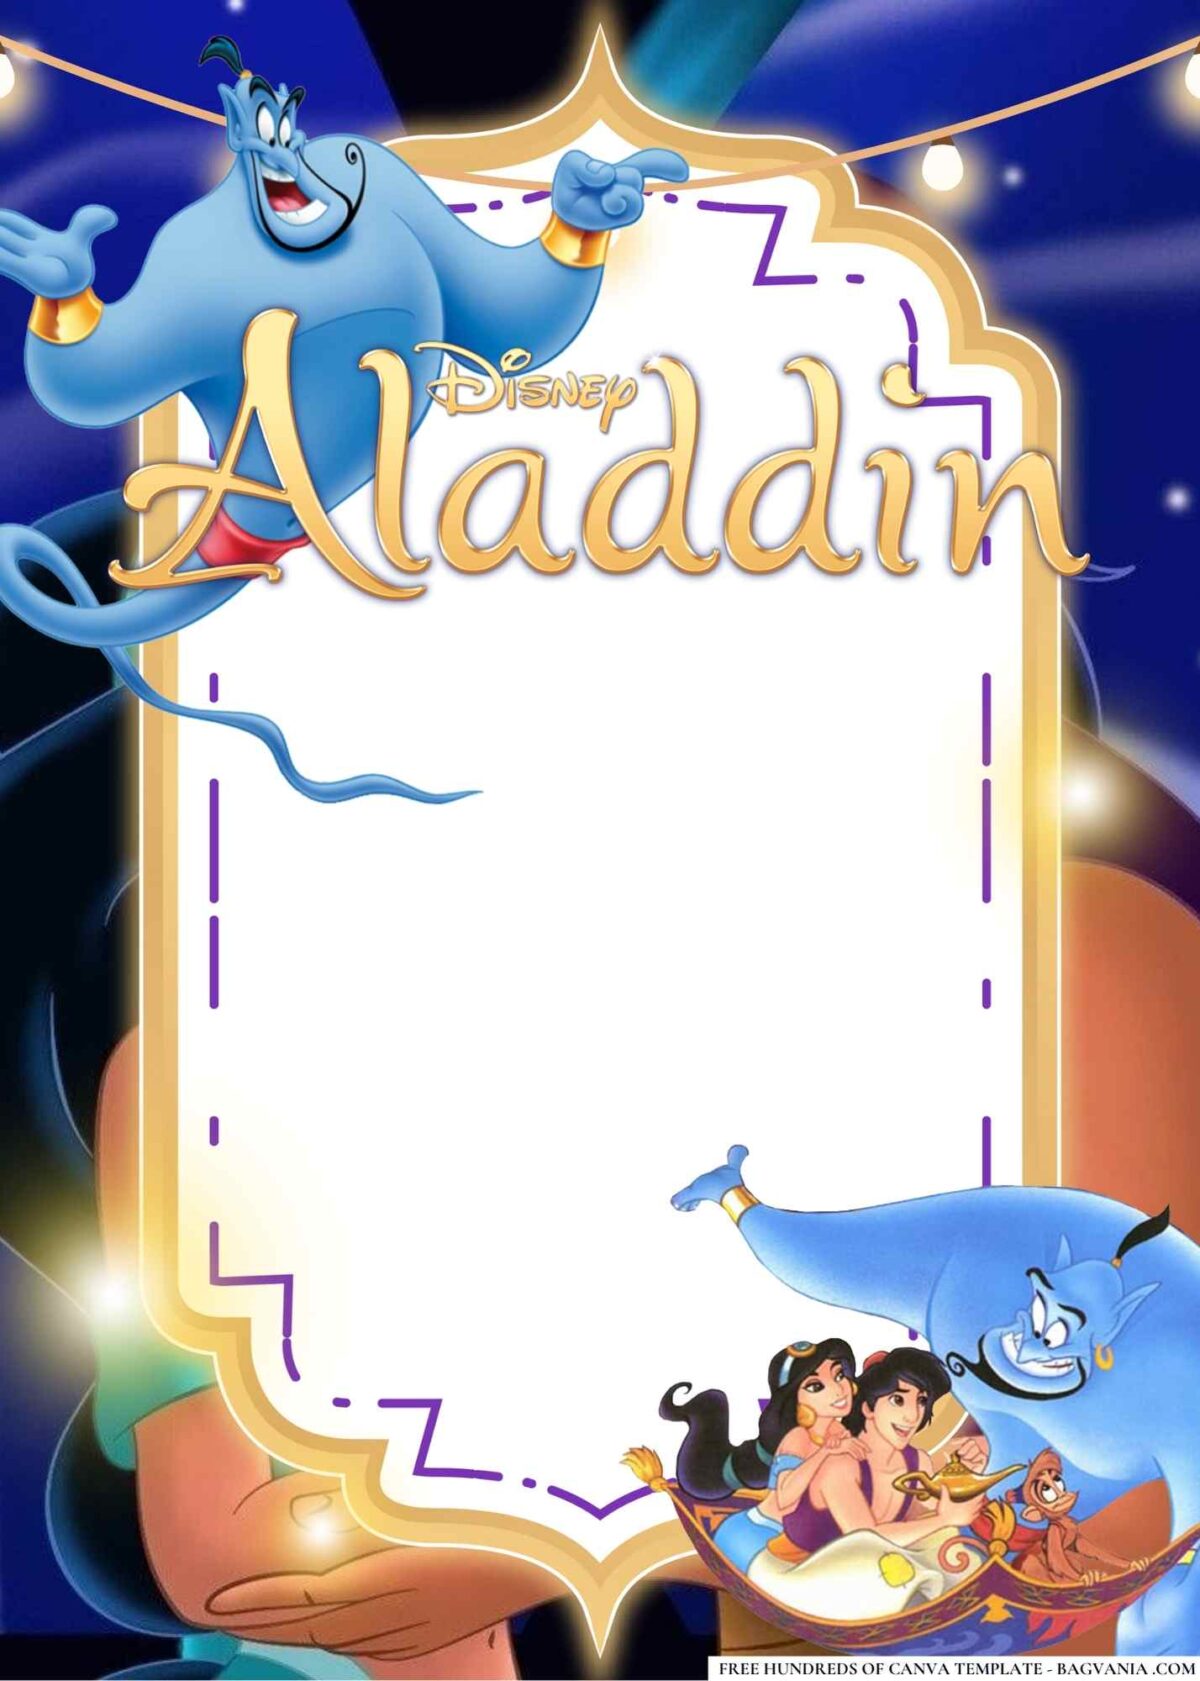 FREE Editable Aladdin Birthday Invitations